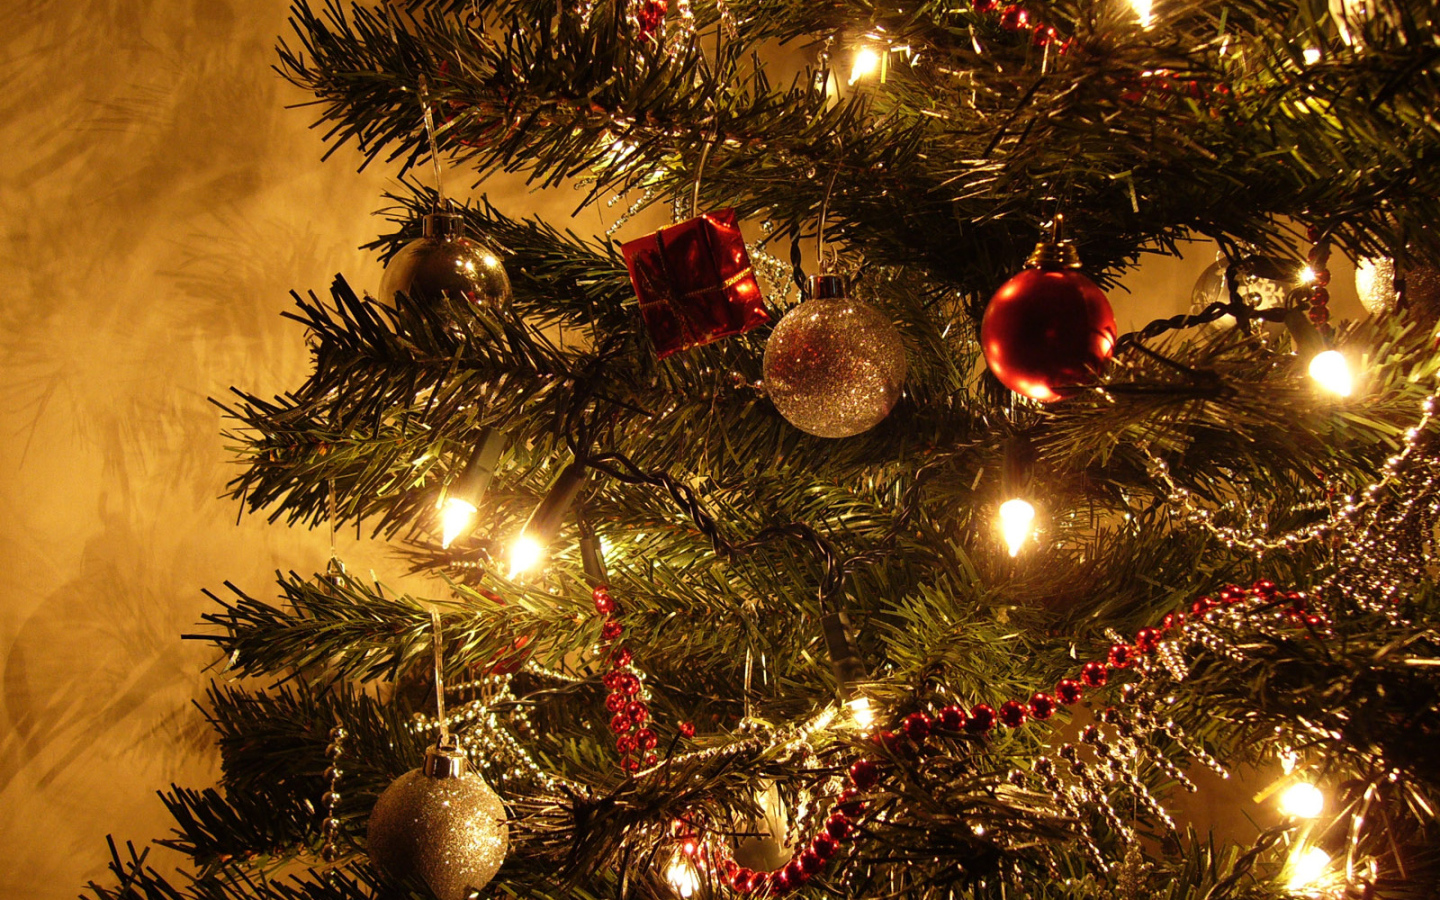 Spruce tree / Christmas